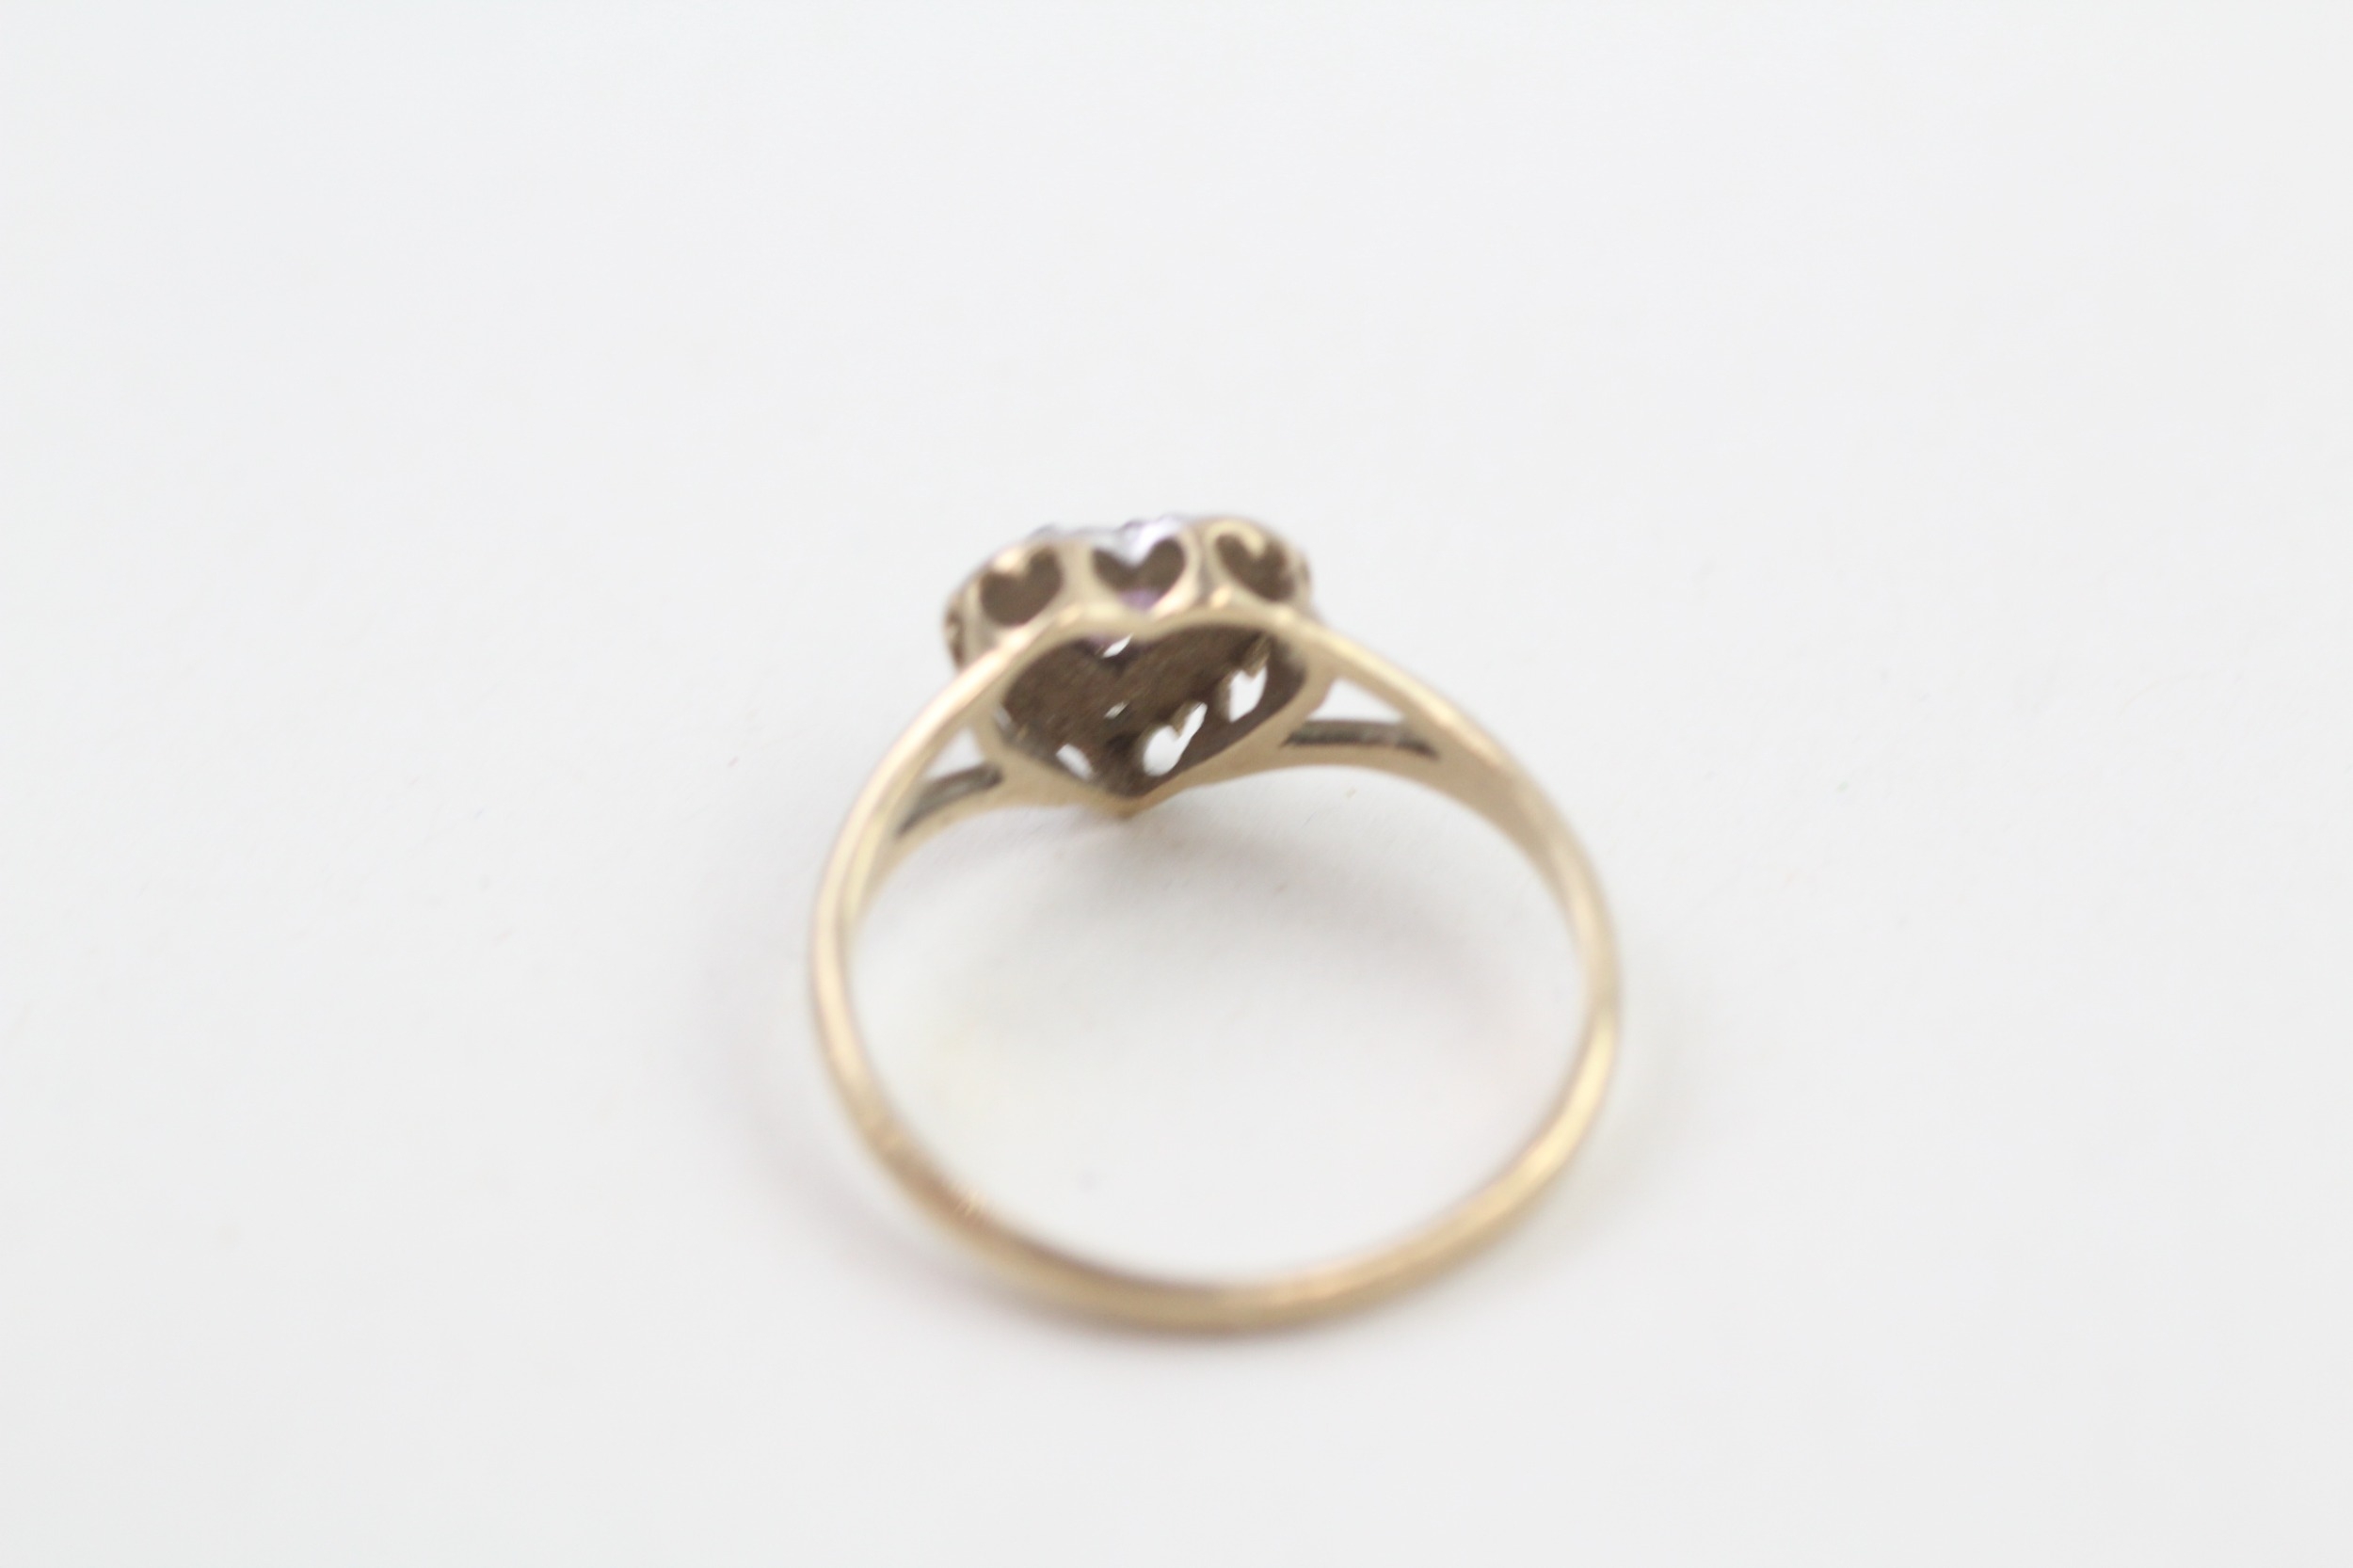 9ct gold purple & white gemstone dress ring (1.5g) - Image 4 of 4